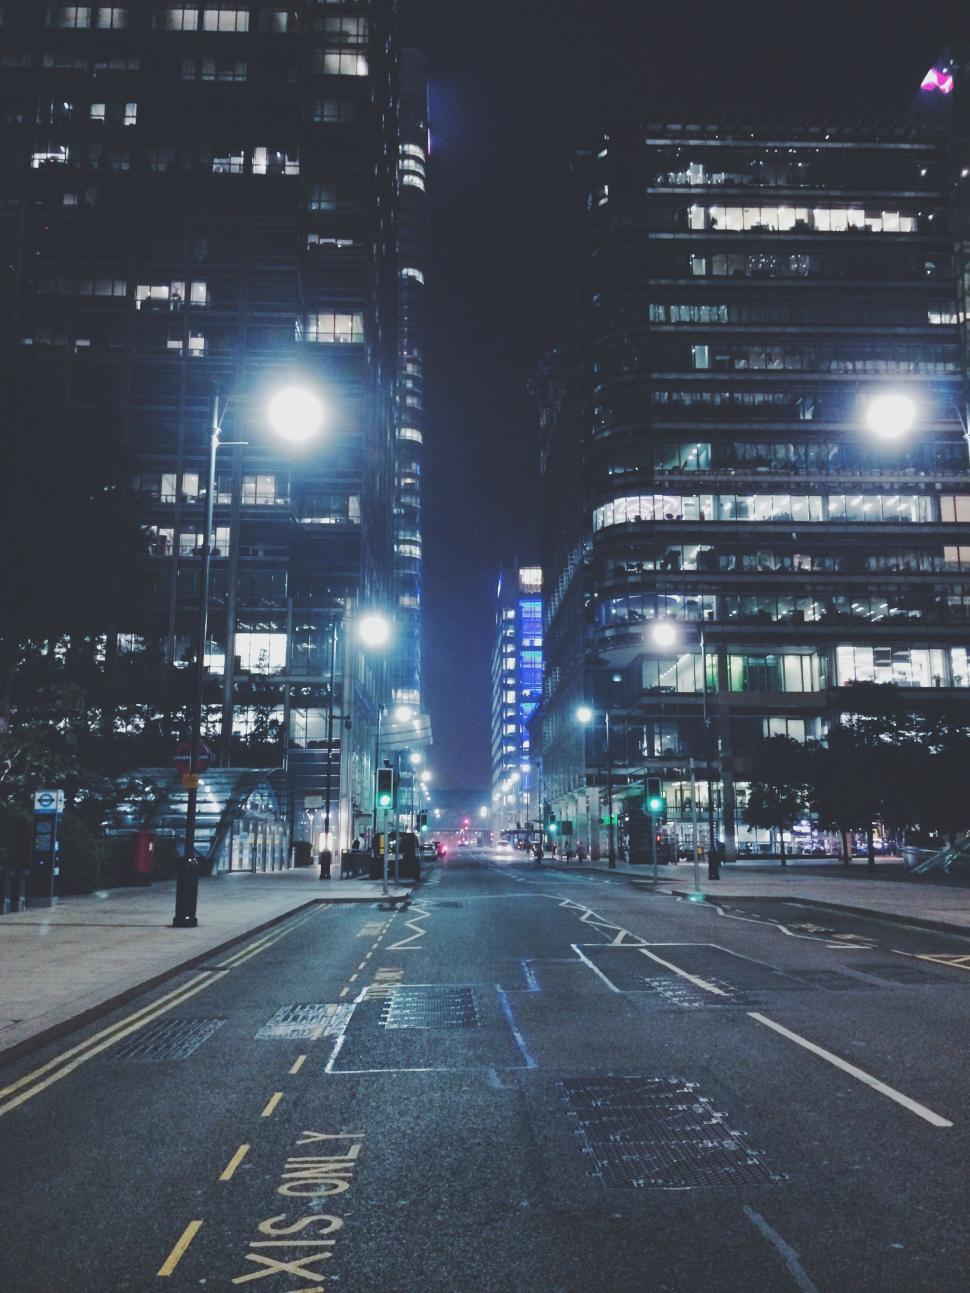 Free Image of Busy City Street Illuminated by Night Lights 